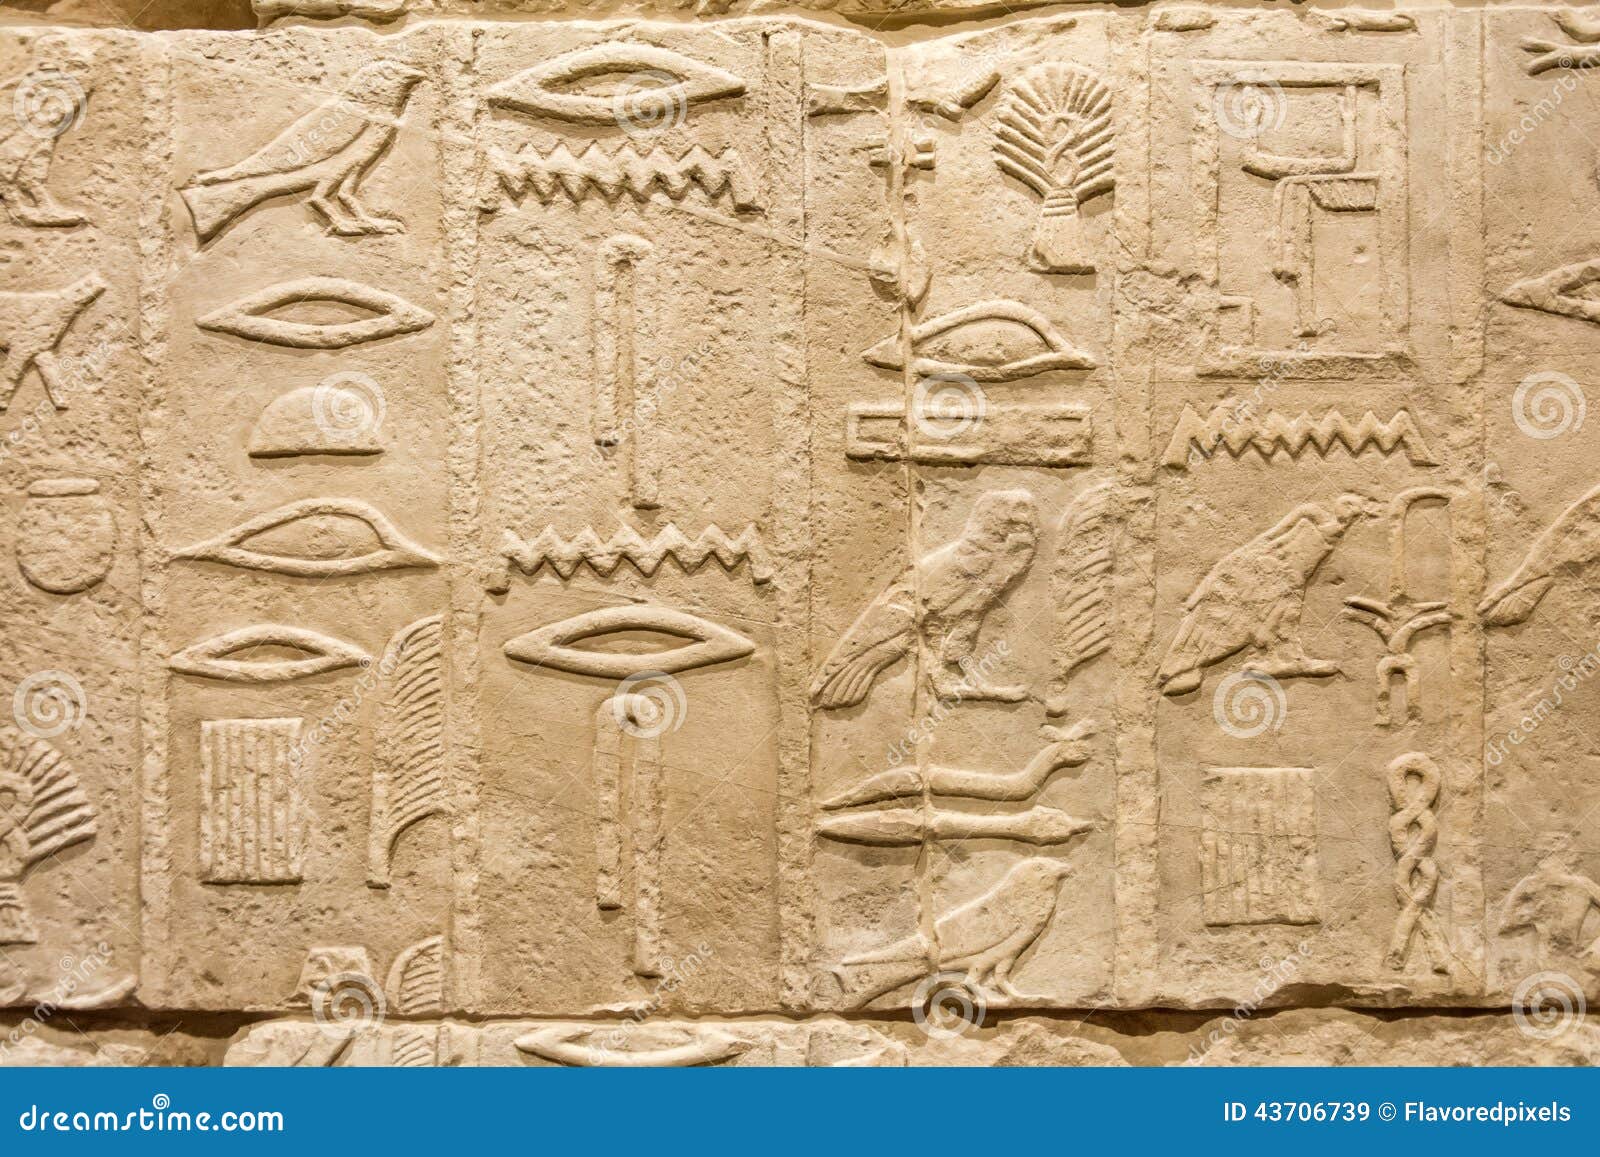 Egyptian hieroglyph stock image. Image of concrete, crack - 43706739